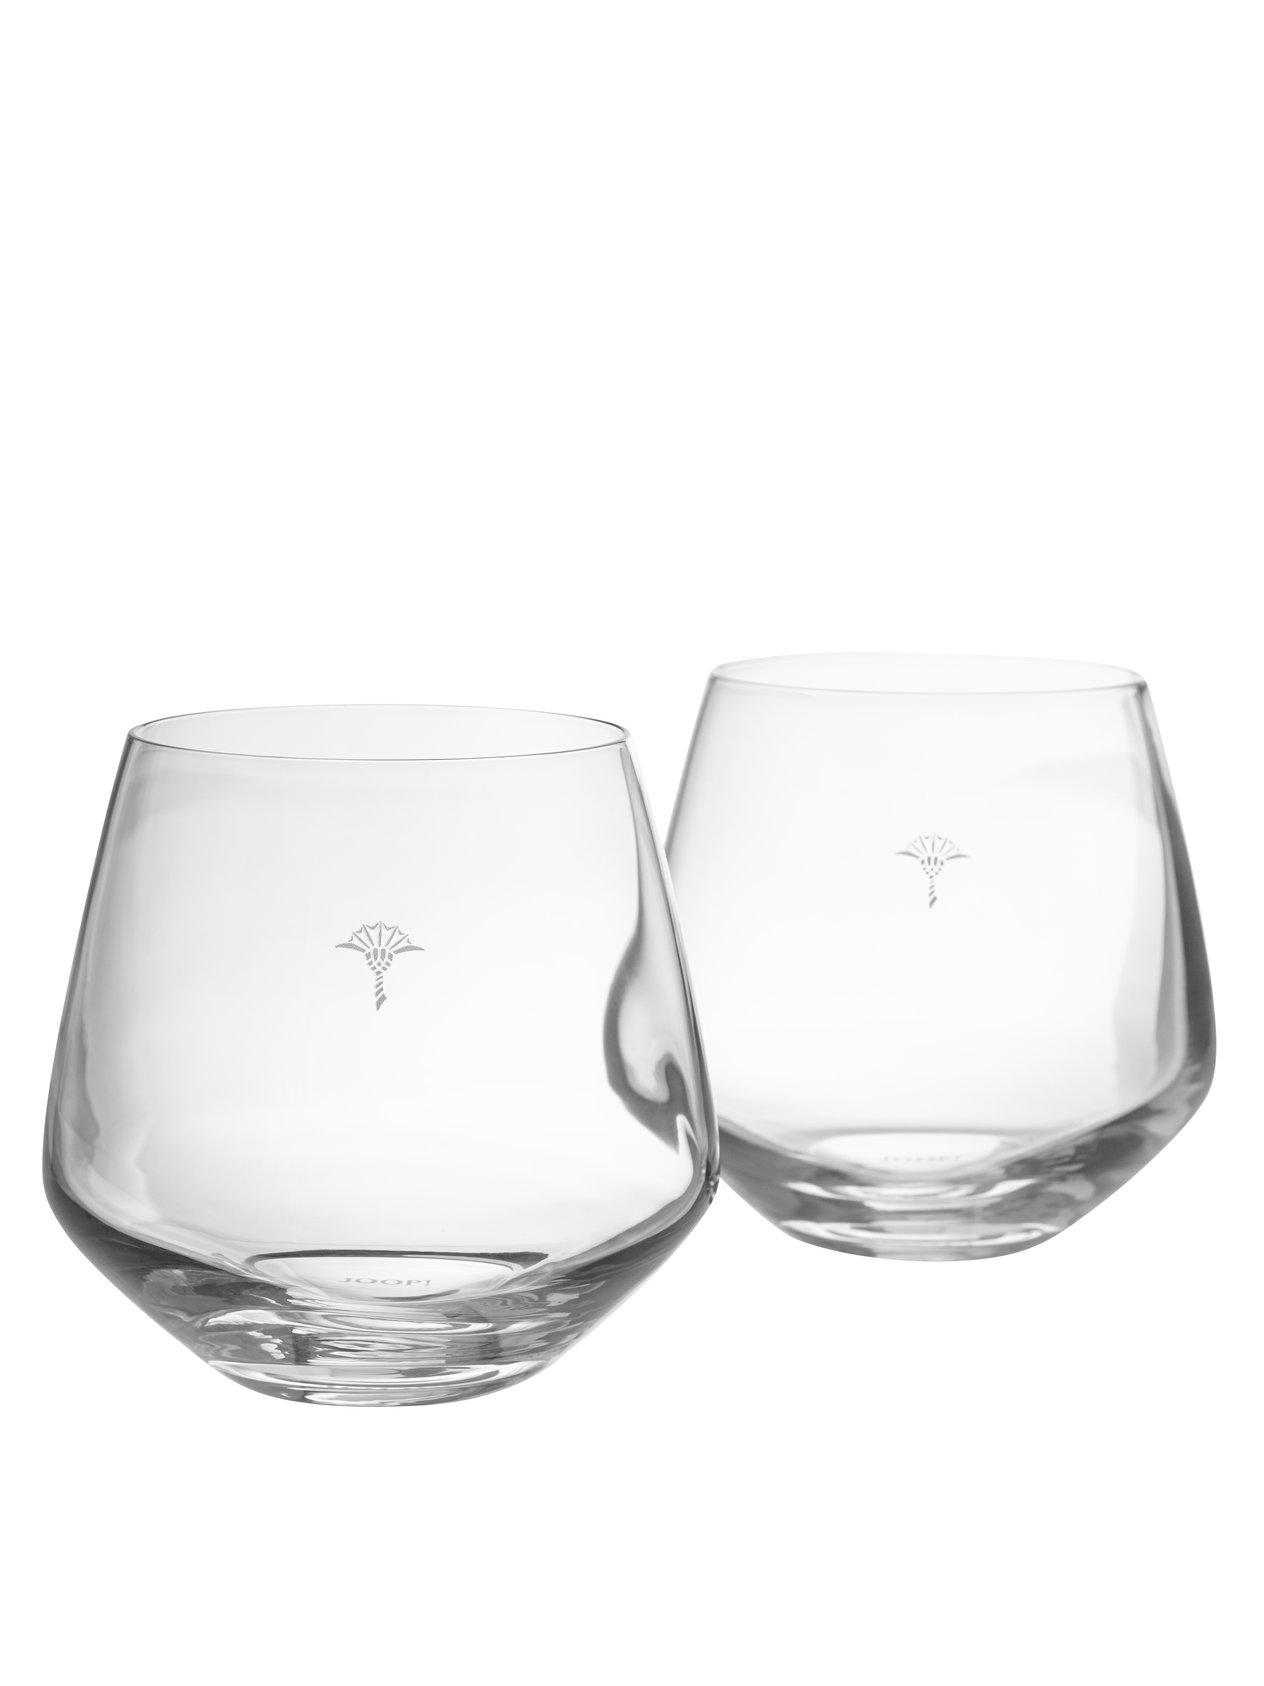 WASSERGLAS  2-teilig  - Design, Glas (9,5/9,0cm) - Joop!